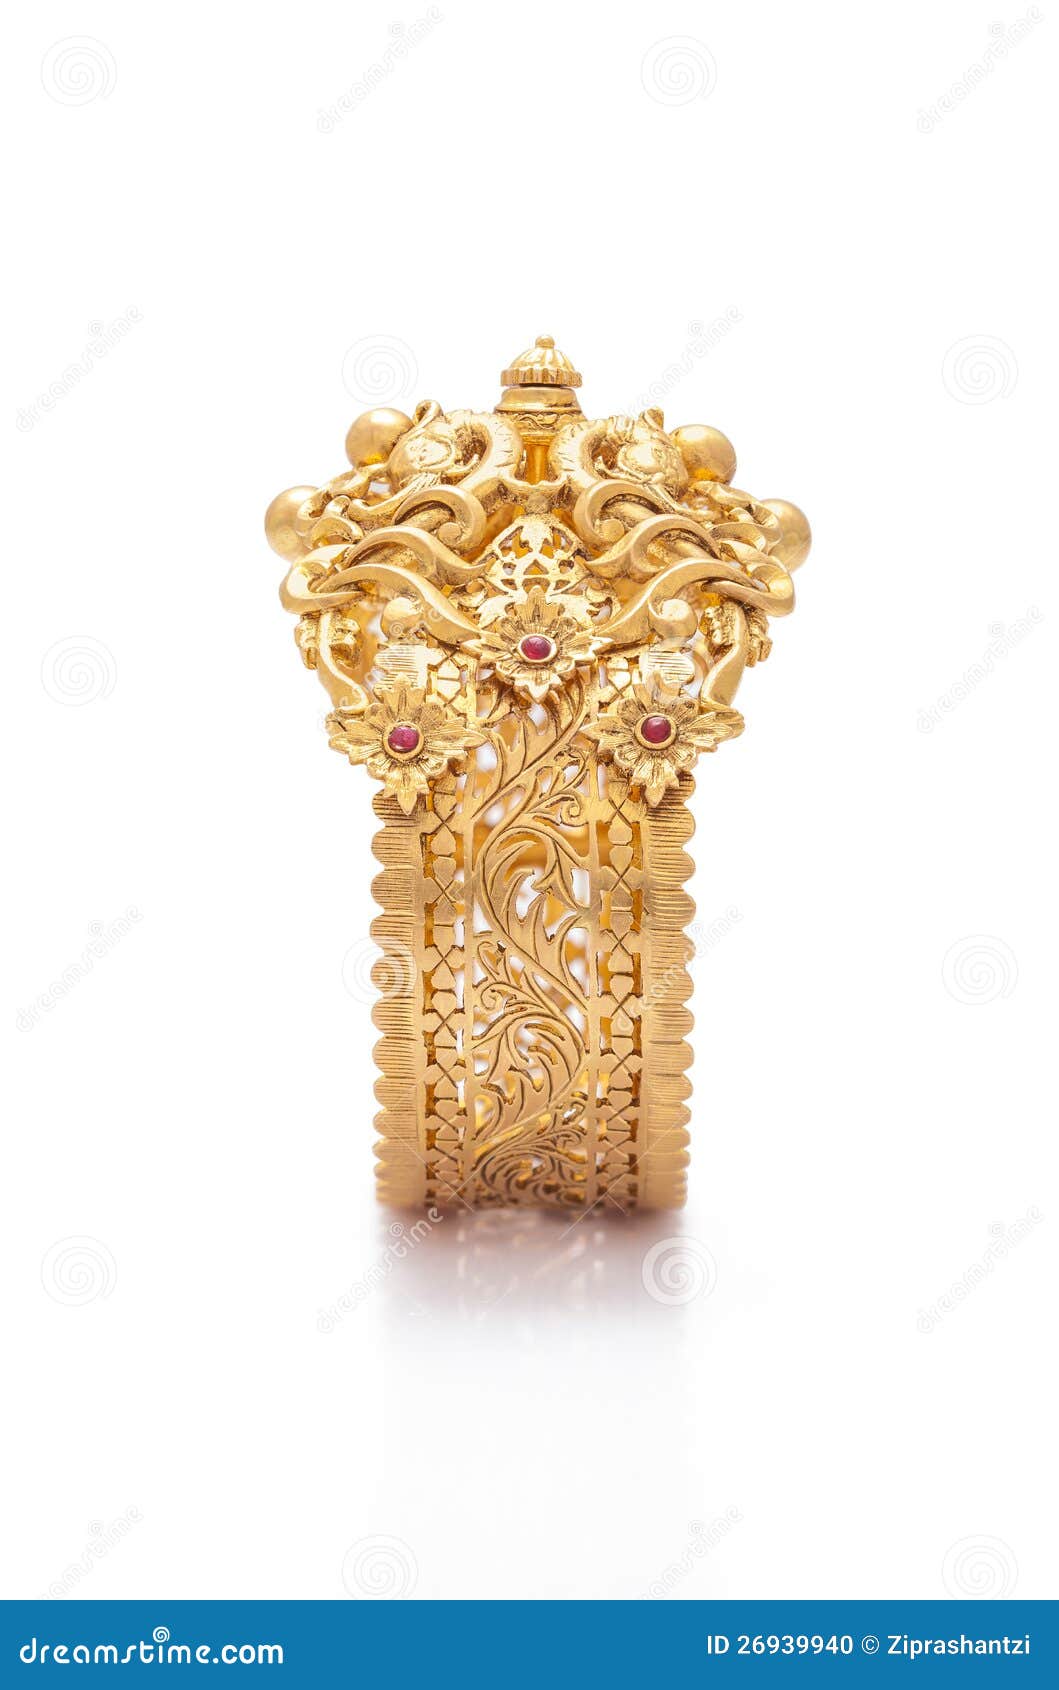 MxGxFam 18 cm x 8 mm/18.5x12mm Heavy Tank Bracelet For Women Men Jewelry 24  K Pure Gold Plated Cassical Designs - AliExpress